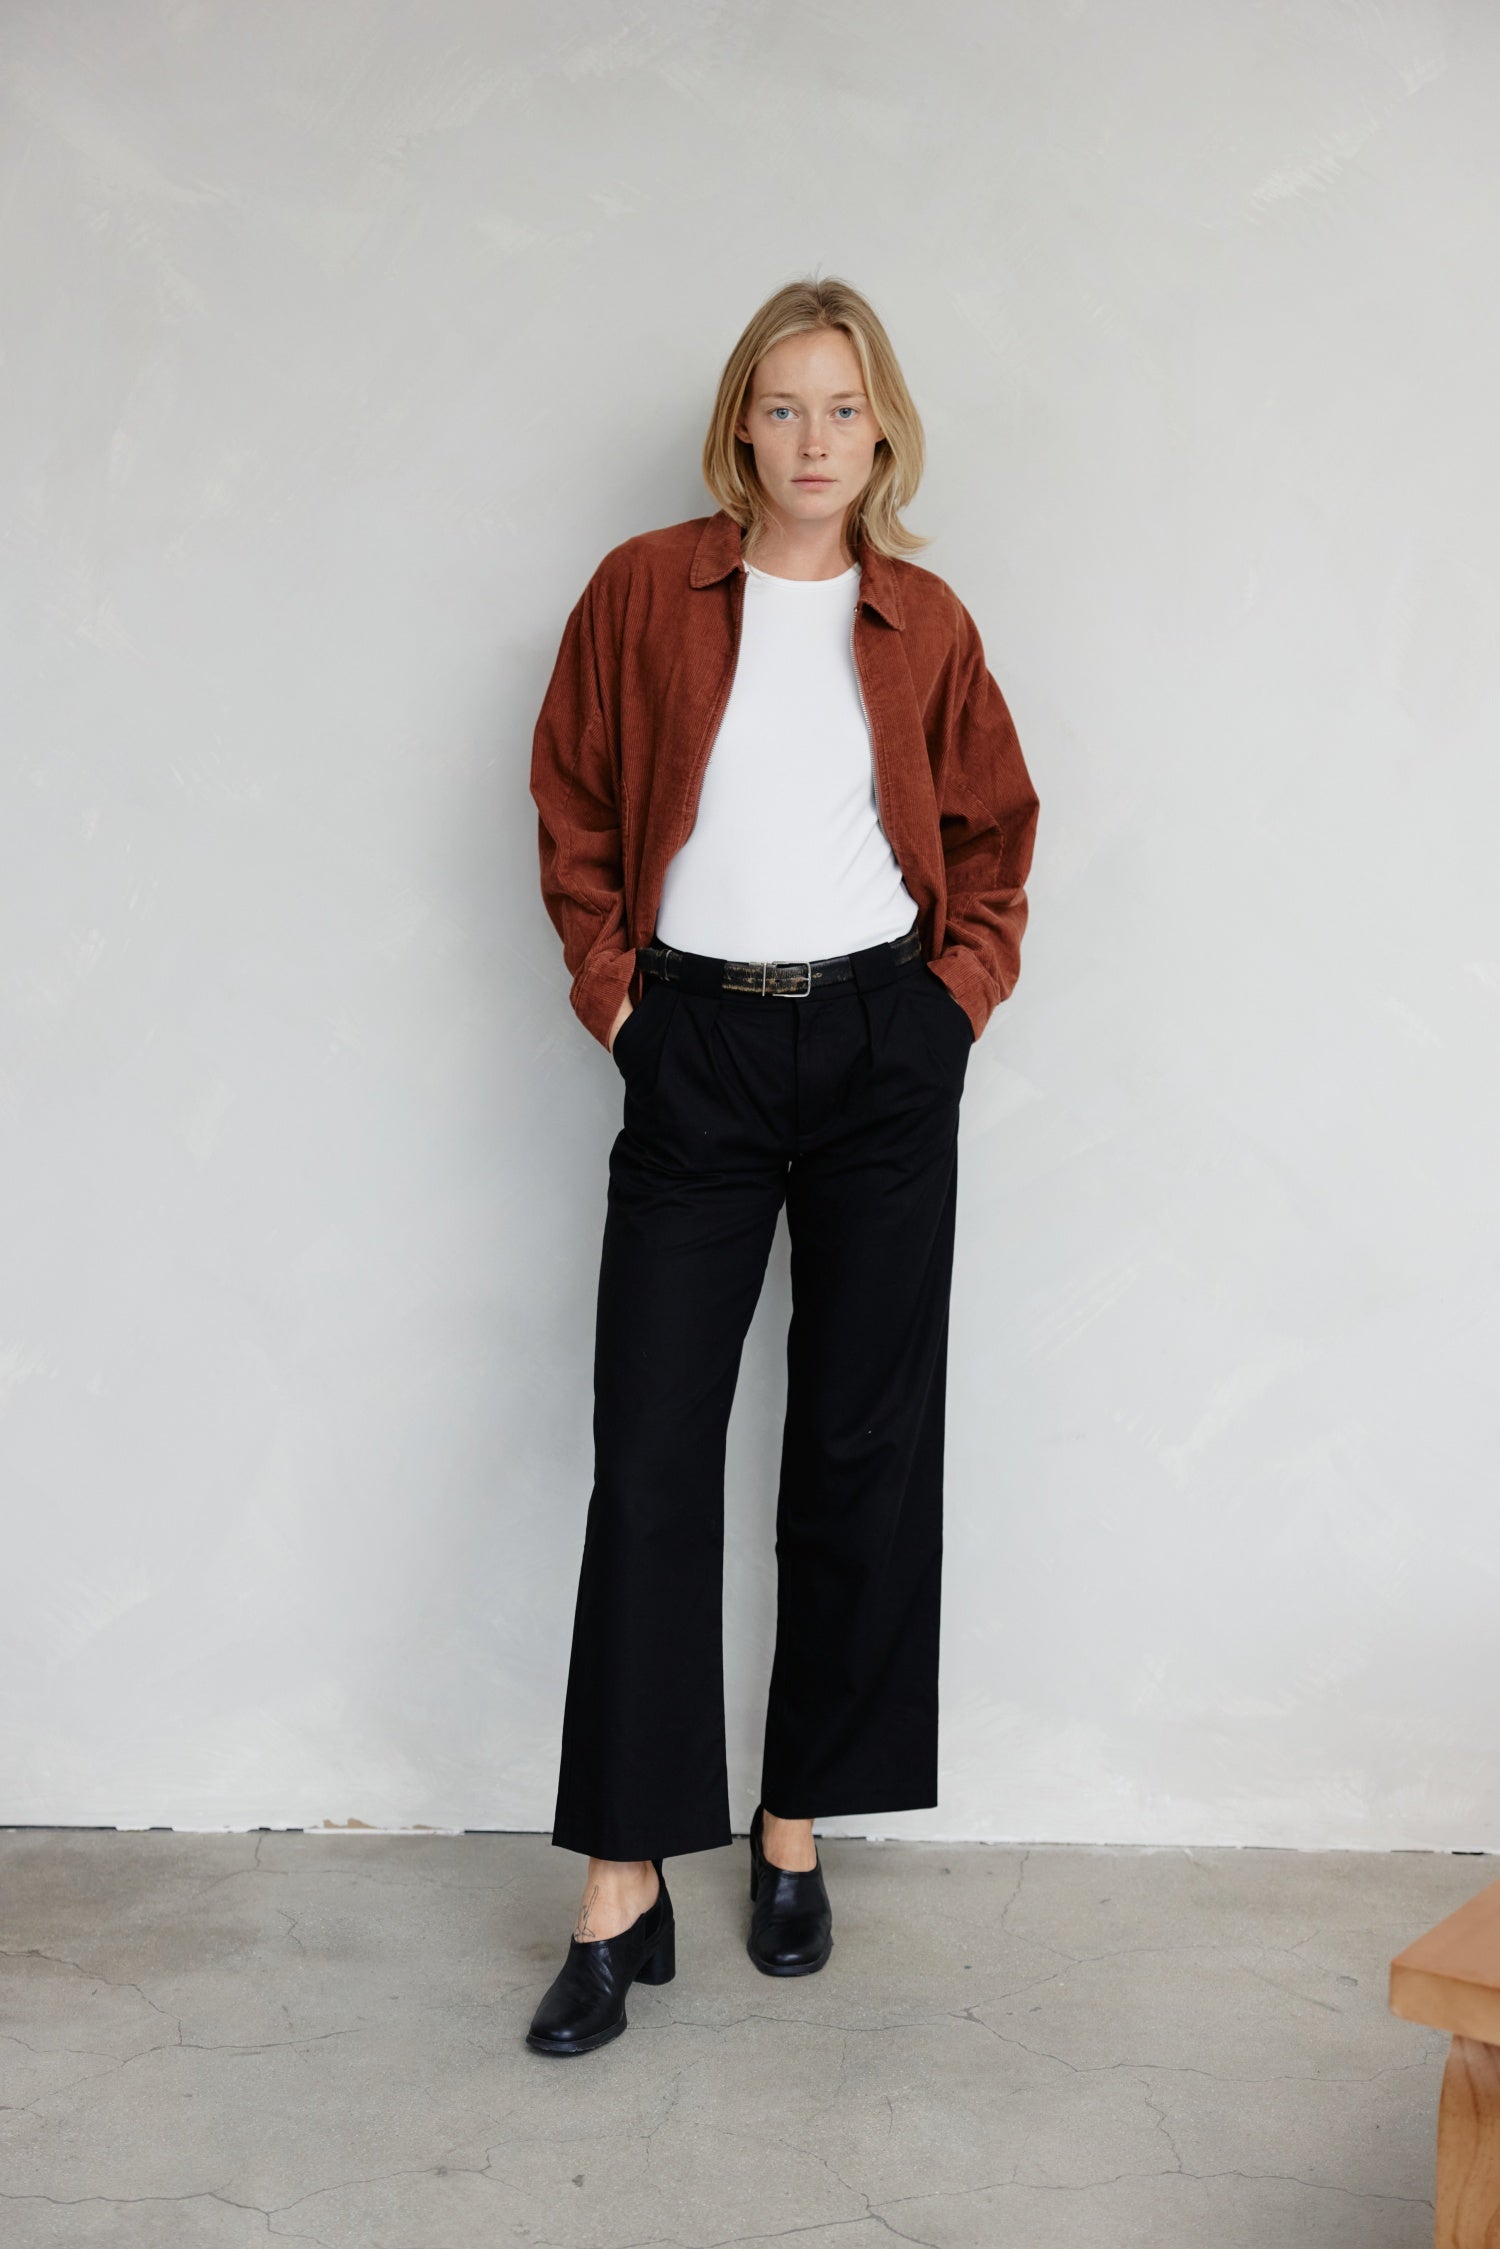 Women's Outerwear – Mod Ref | Common Market